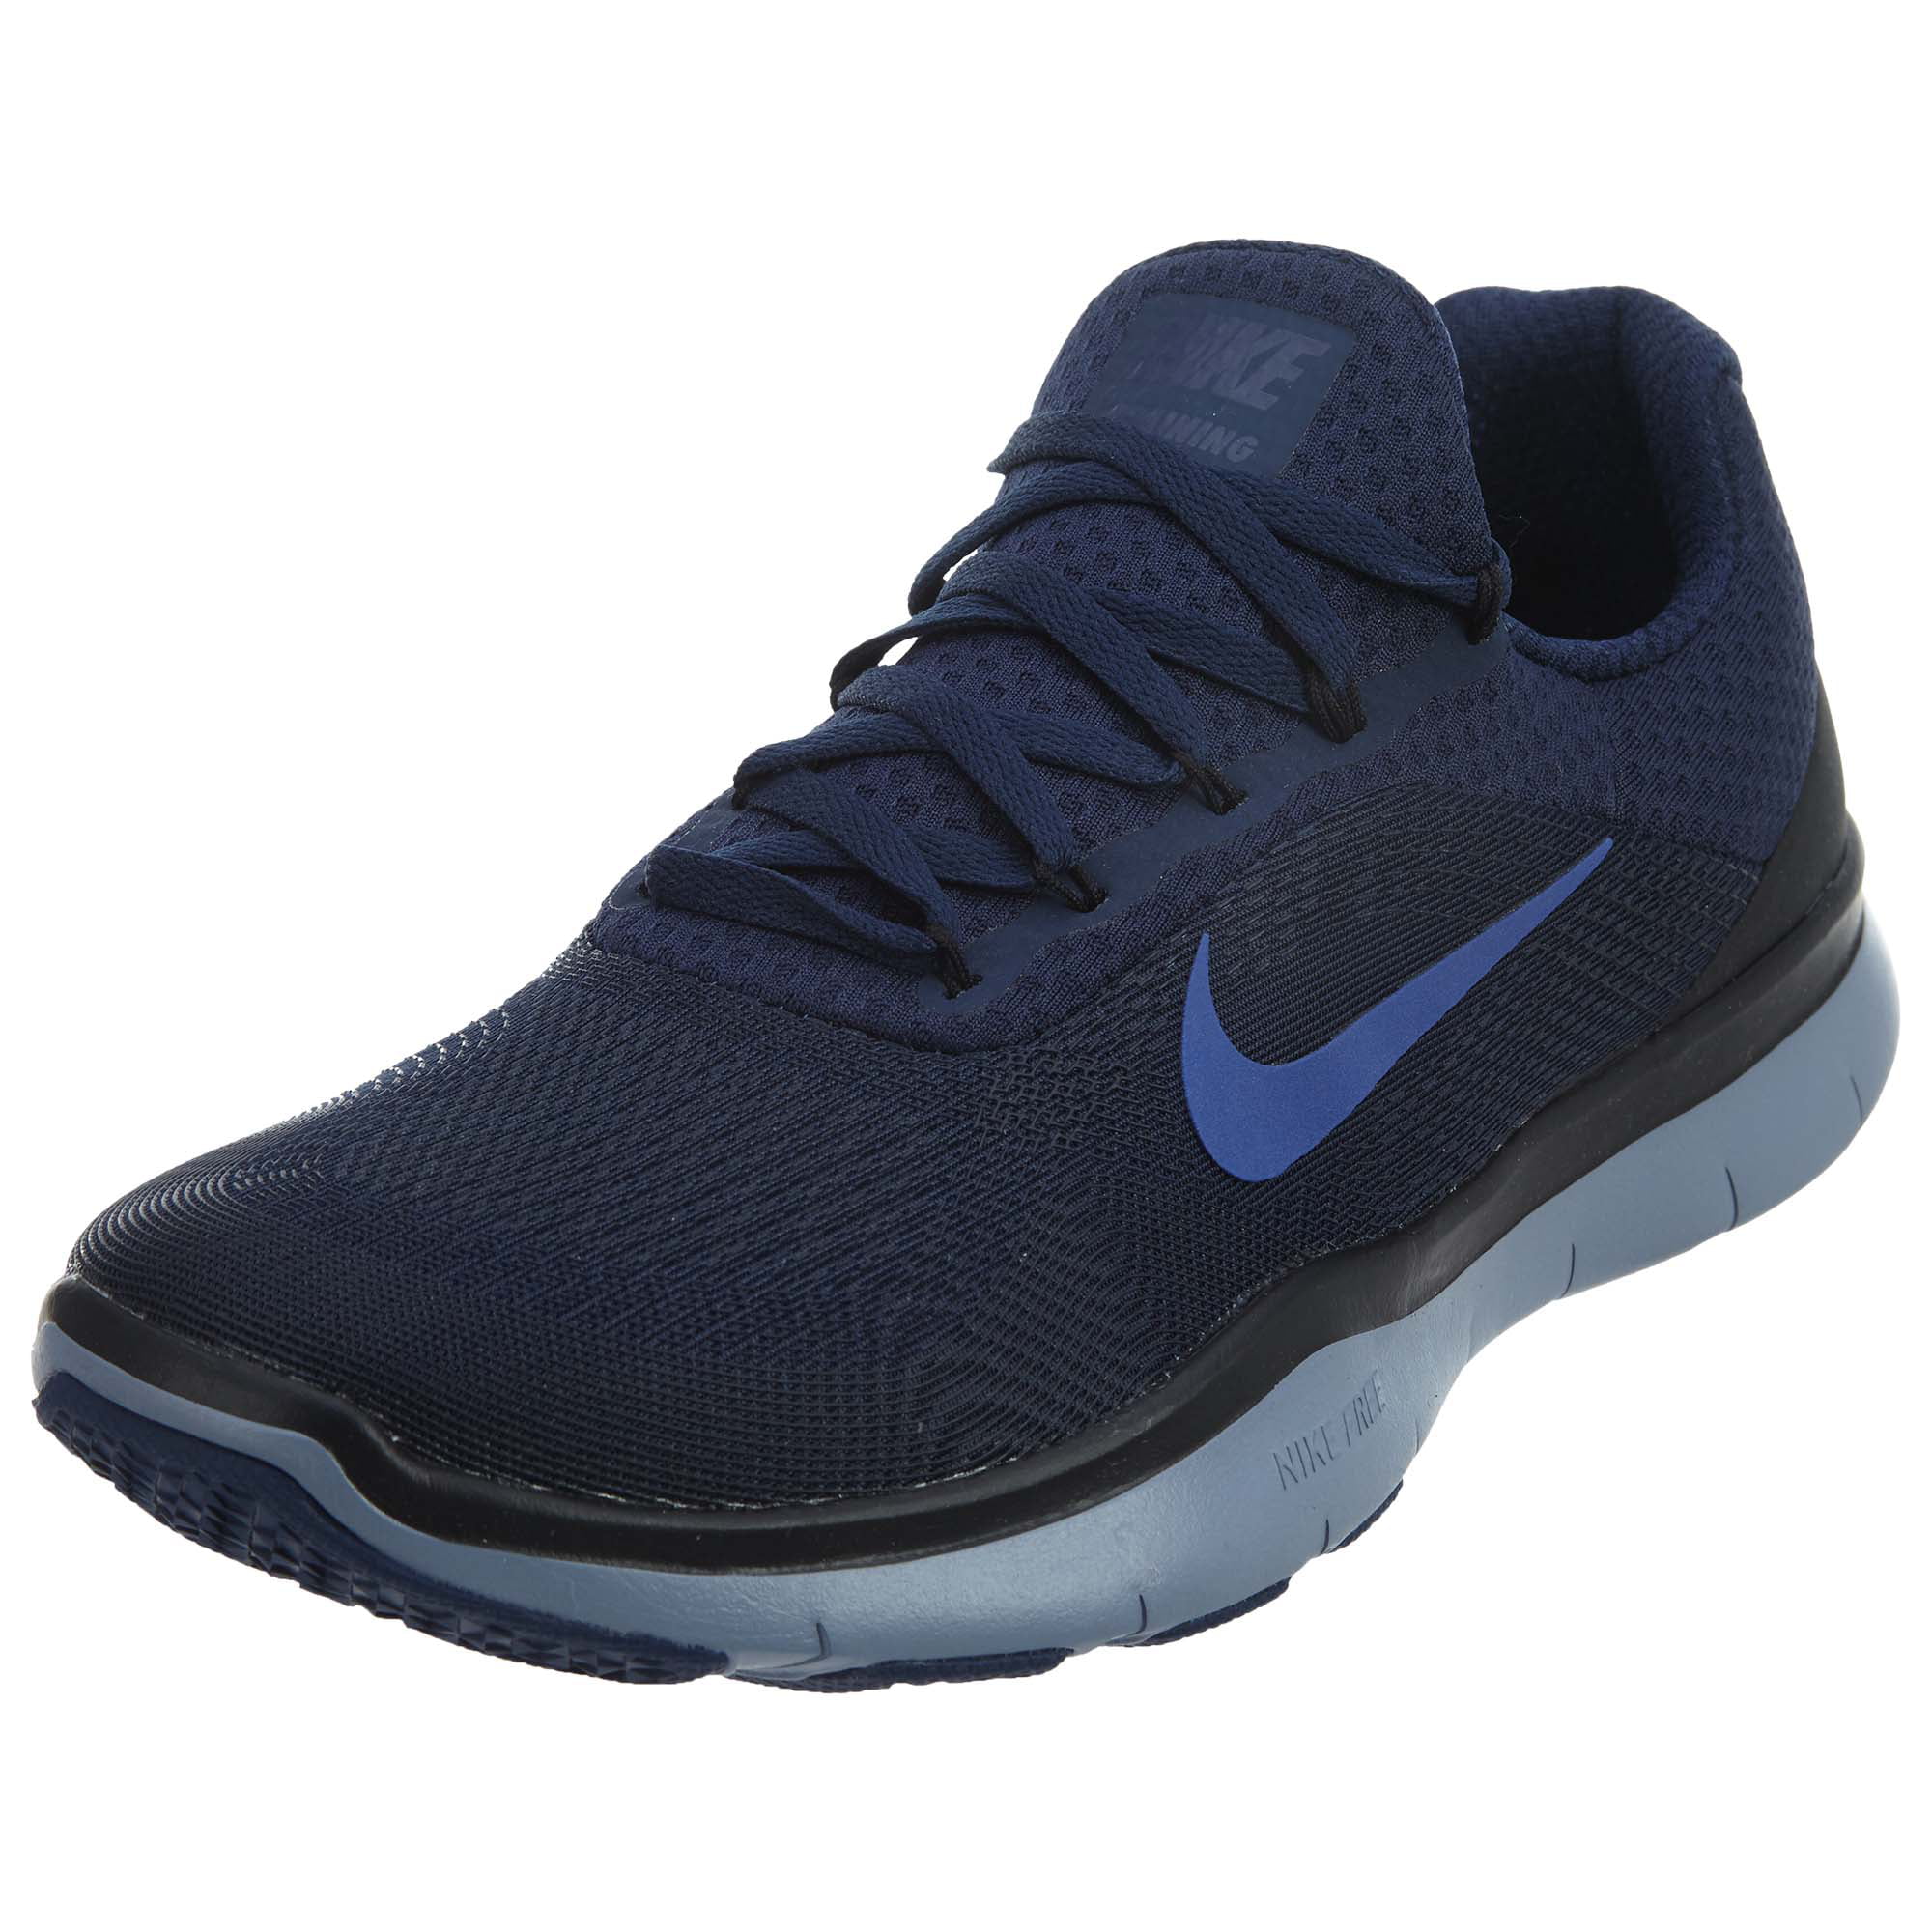 Nike Men's Free Trainer v7 Training Shoes (Blue, 12) - Walmart.com